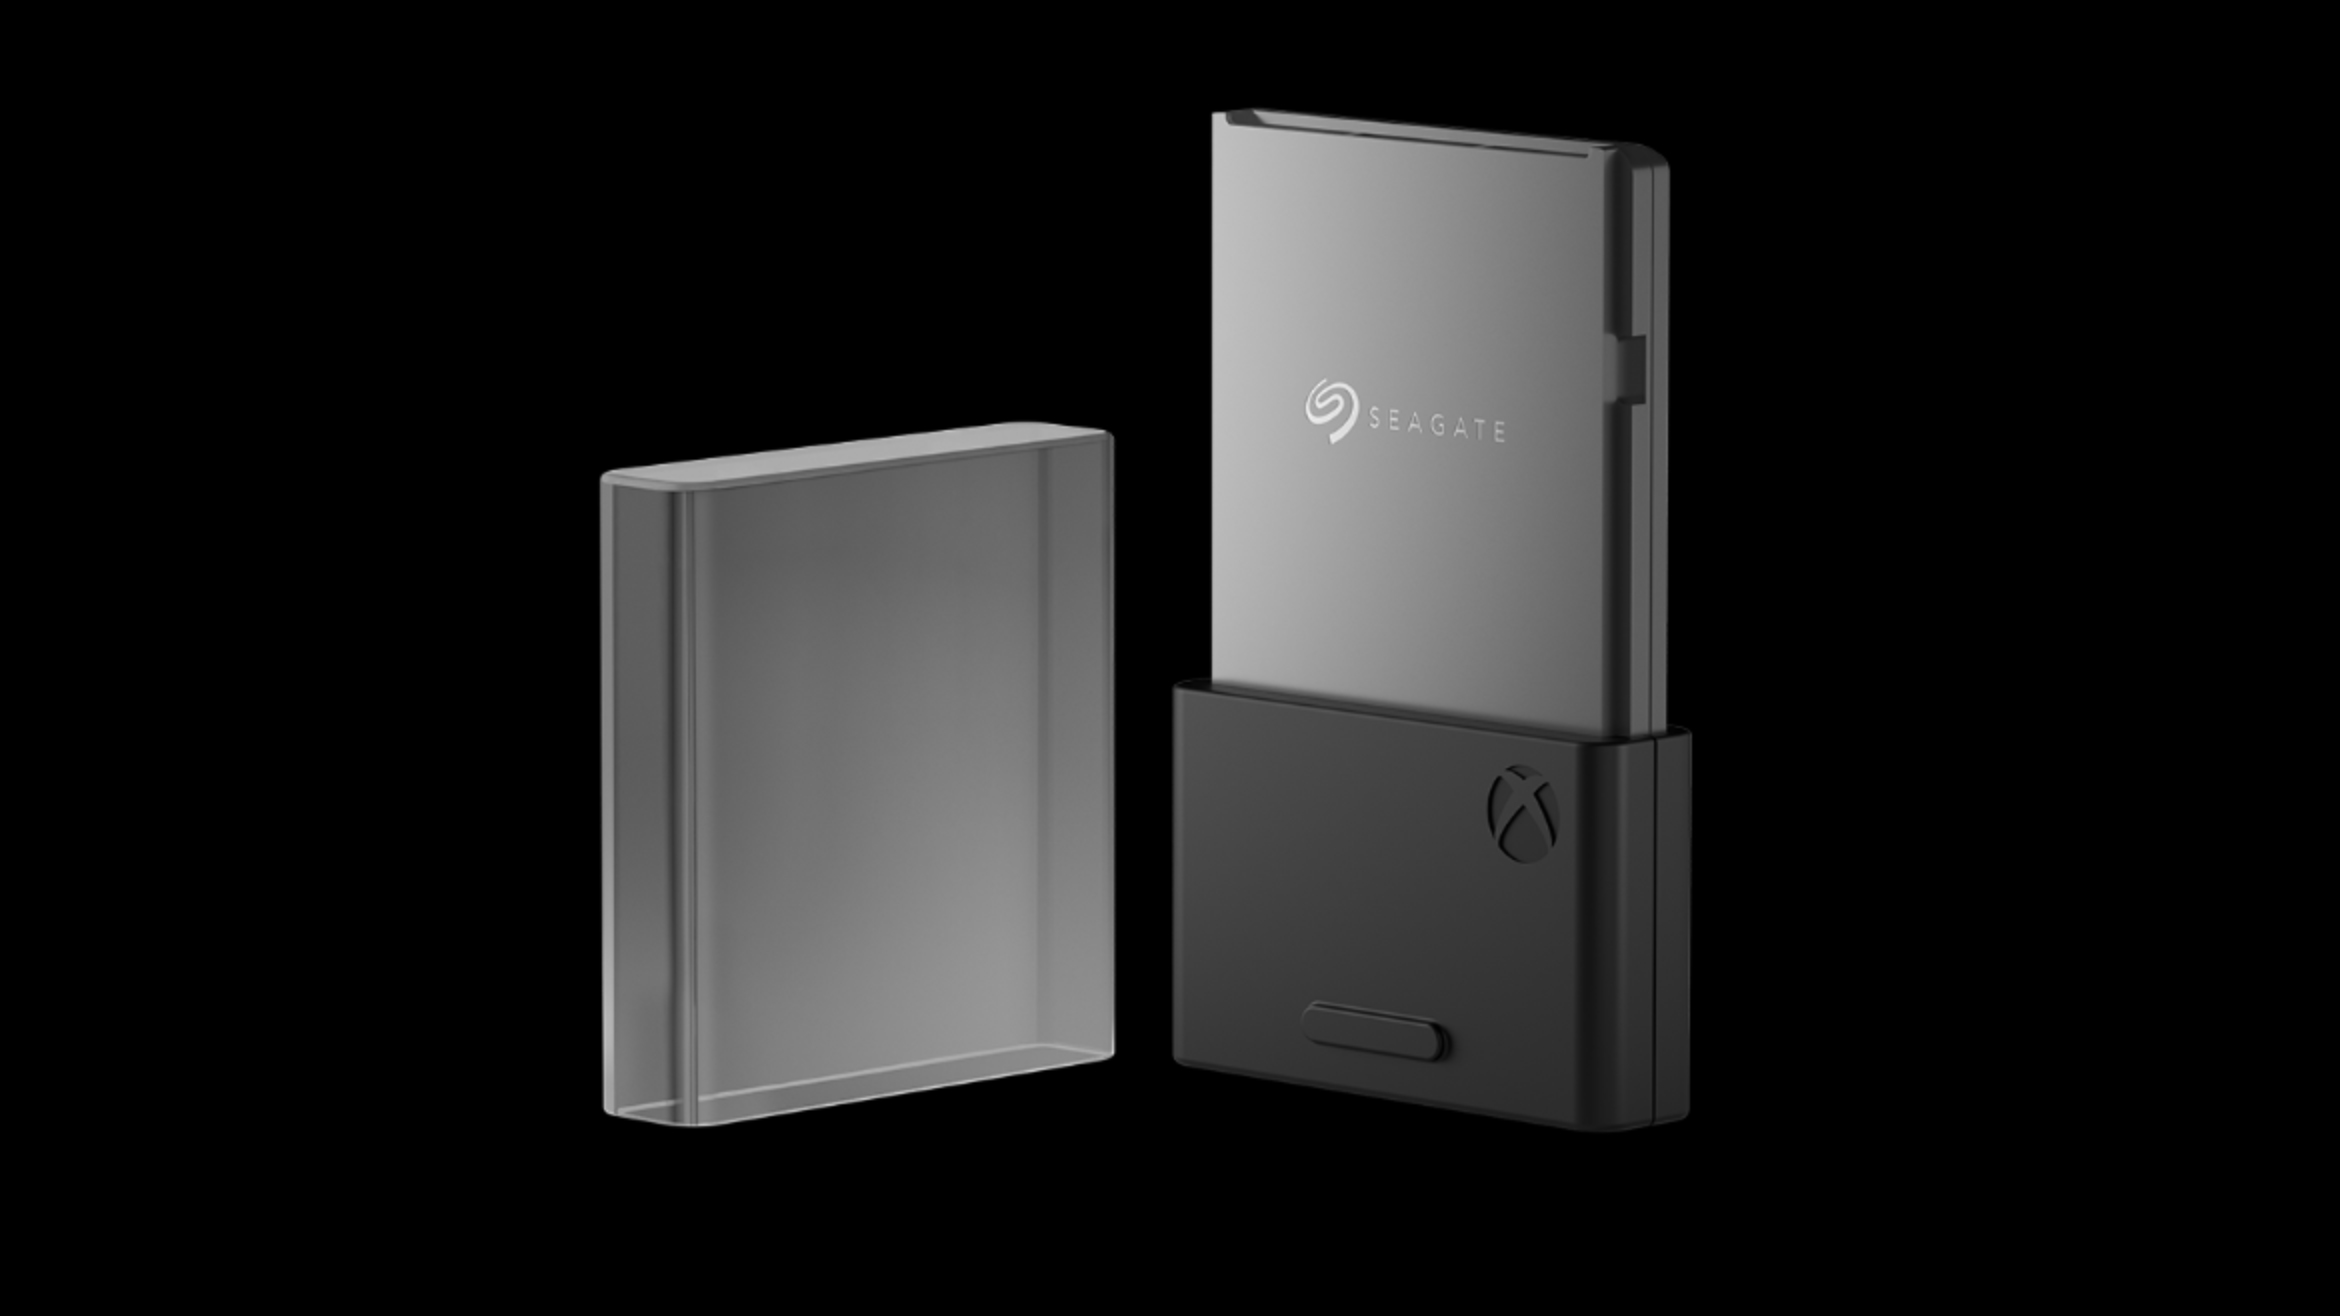 Microsoft's Xbox Series X 1TB expandable storage pricing revealed: £159 ($220) | What Hi-Fi?